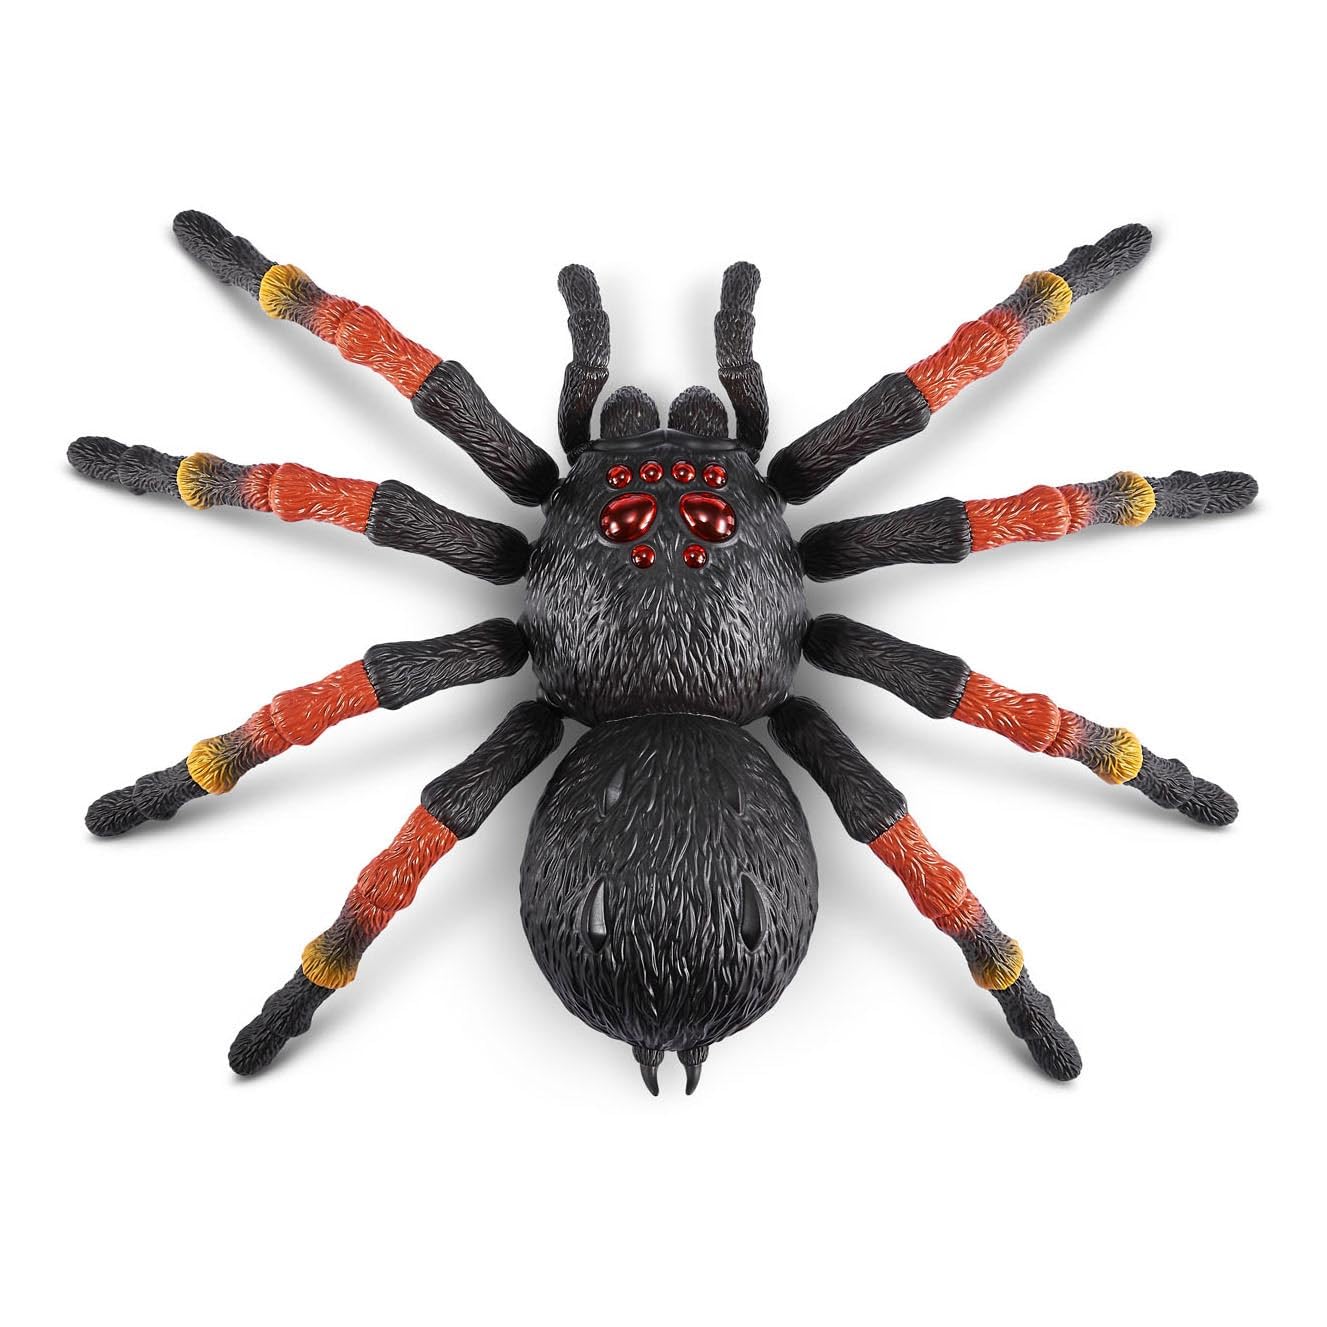 ZURU Robo Alive - Giant Spider S1 (7170)